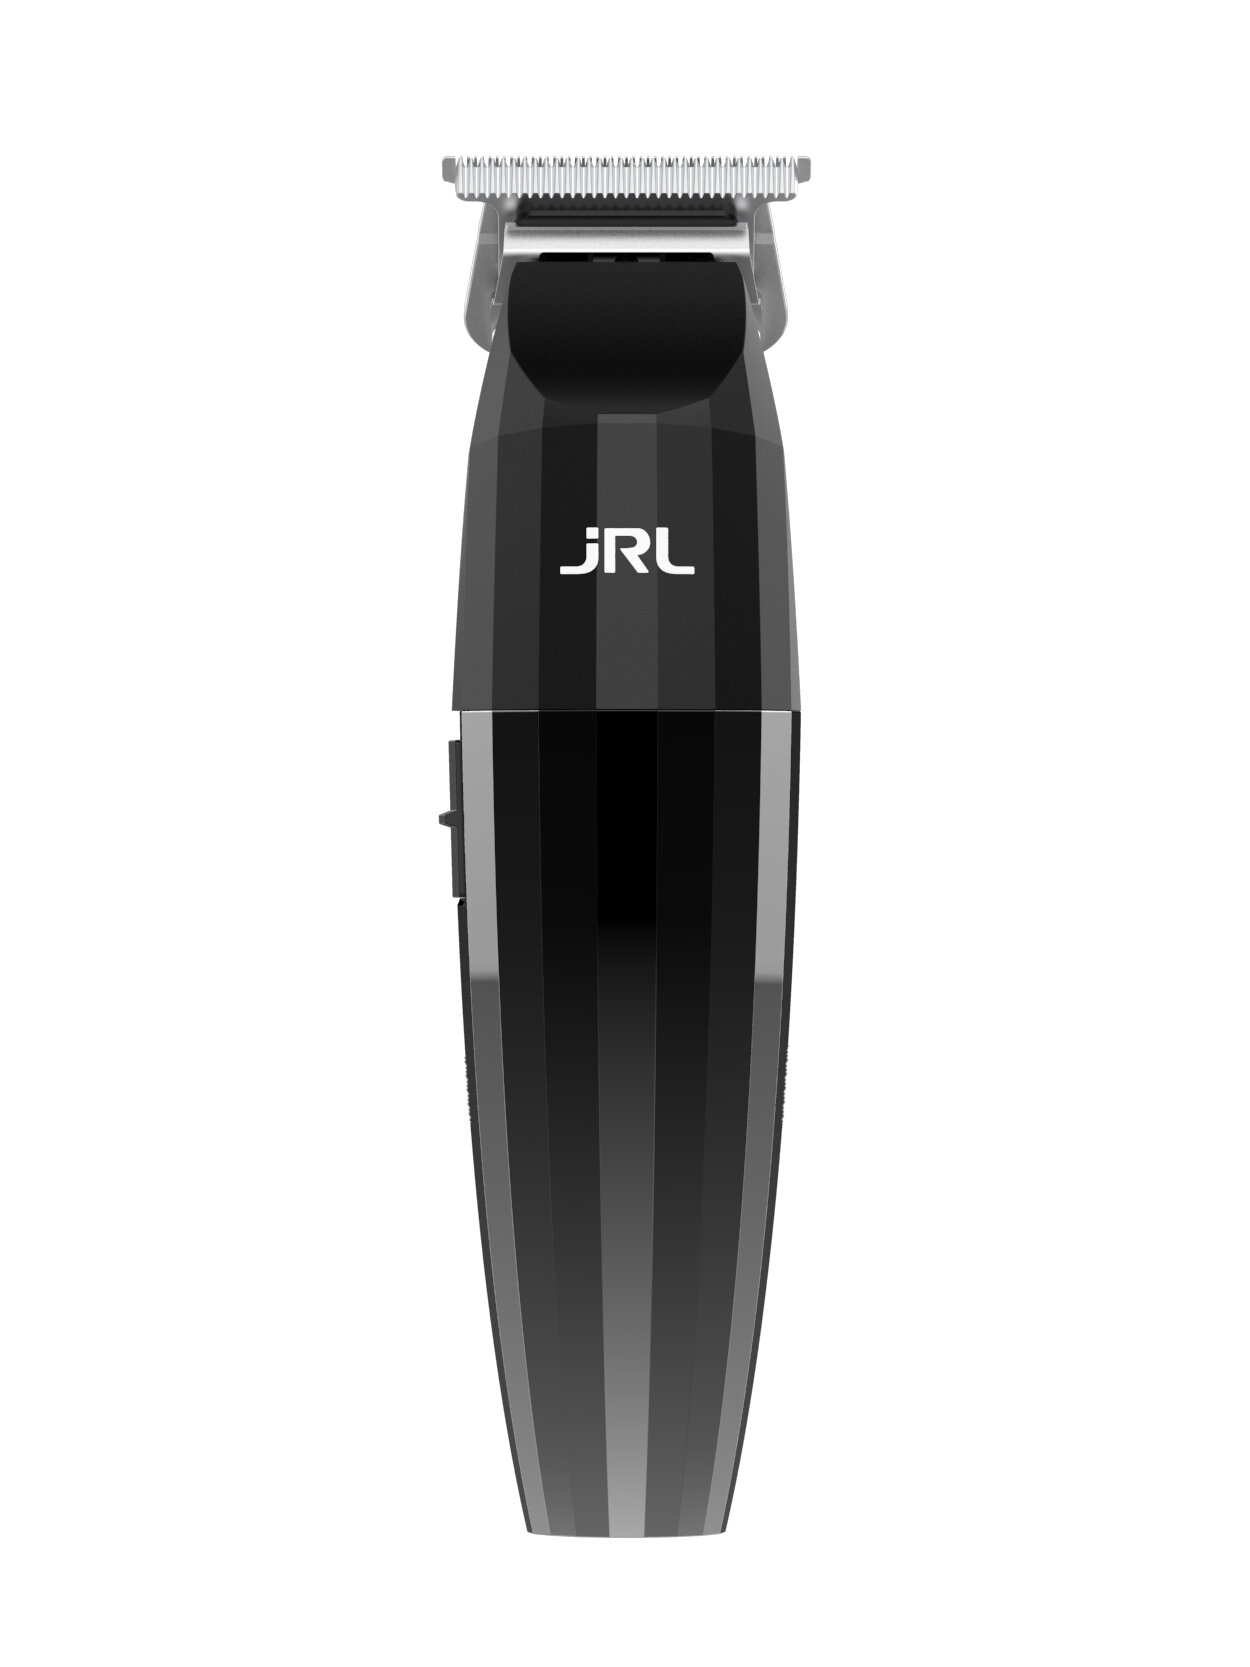 JRL - Professional Finisher FreshFade 2020T Trimmer - 802020-25394